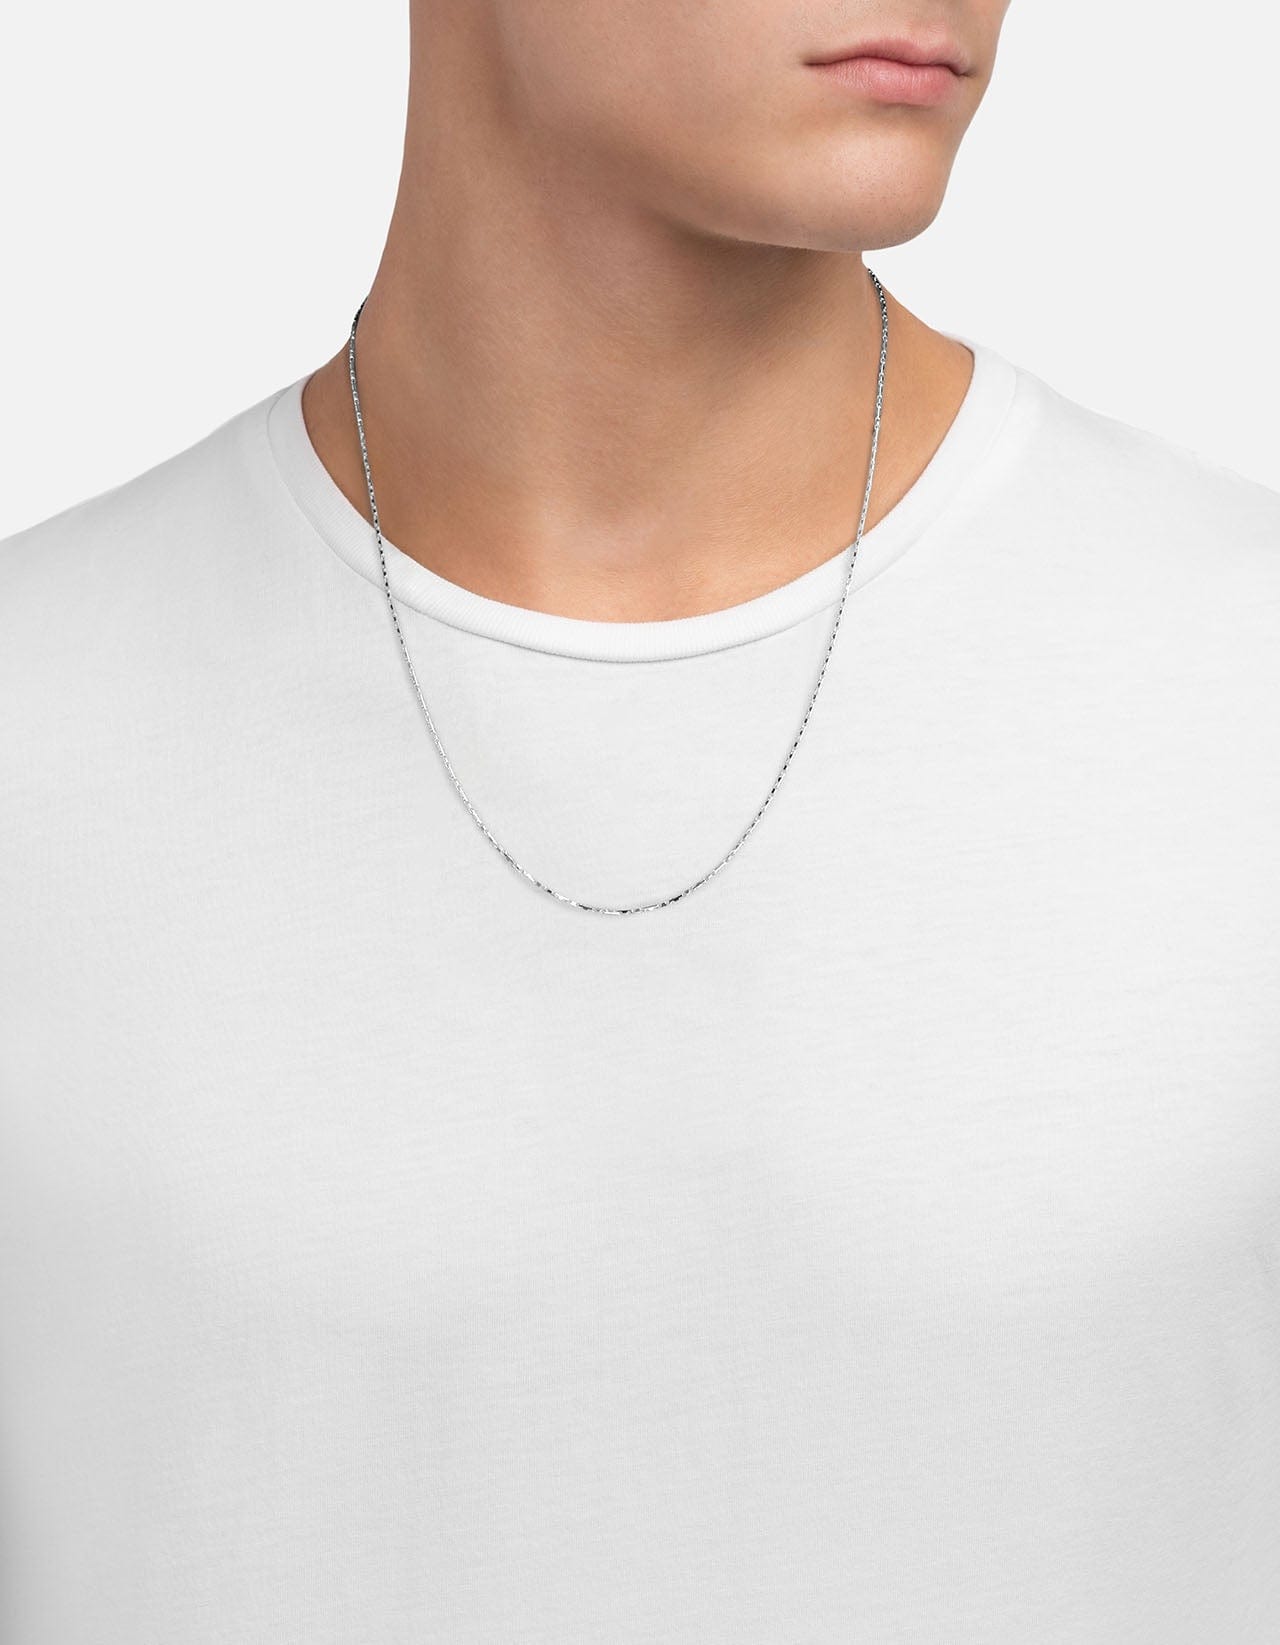 Curb Gold Necklace! | Necklace lengths, Mens jewelry bracelet, Wear  necklaces